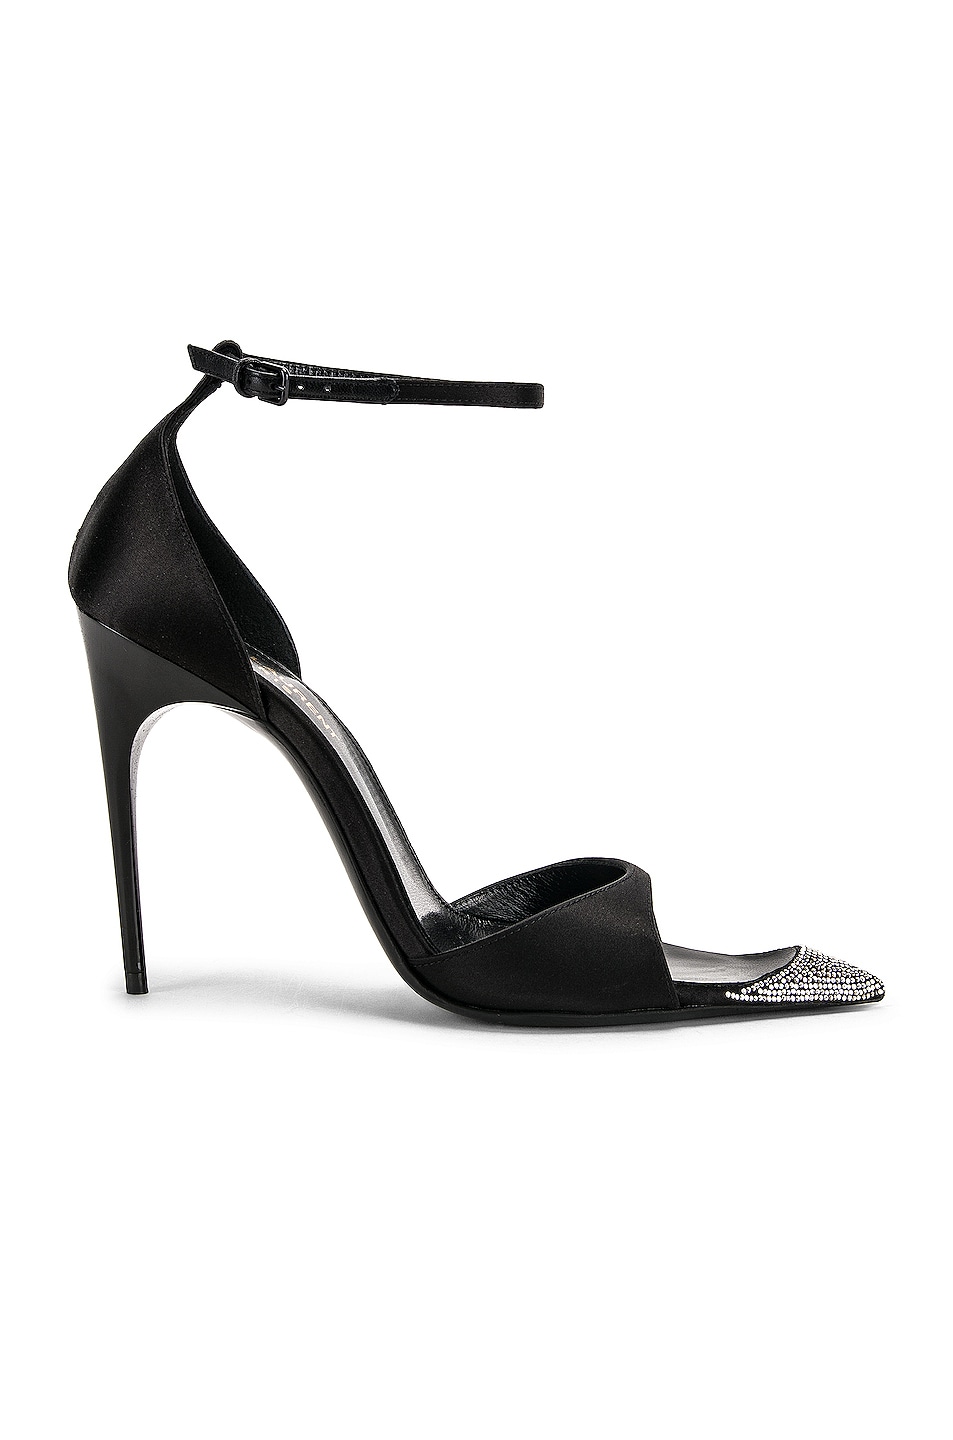 Saint Laurent Palace Crystal Heel Sandal in Black | FWRD